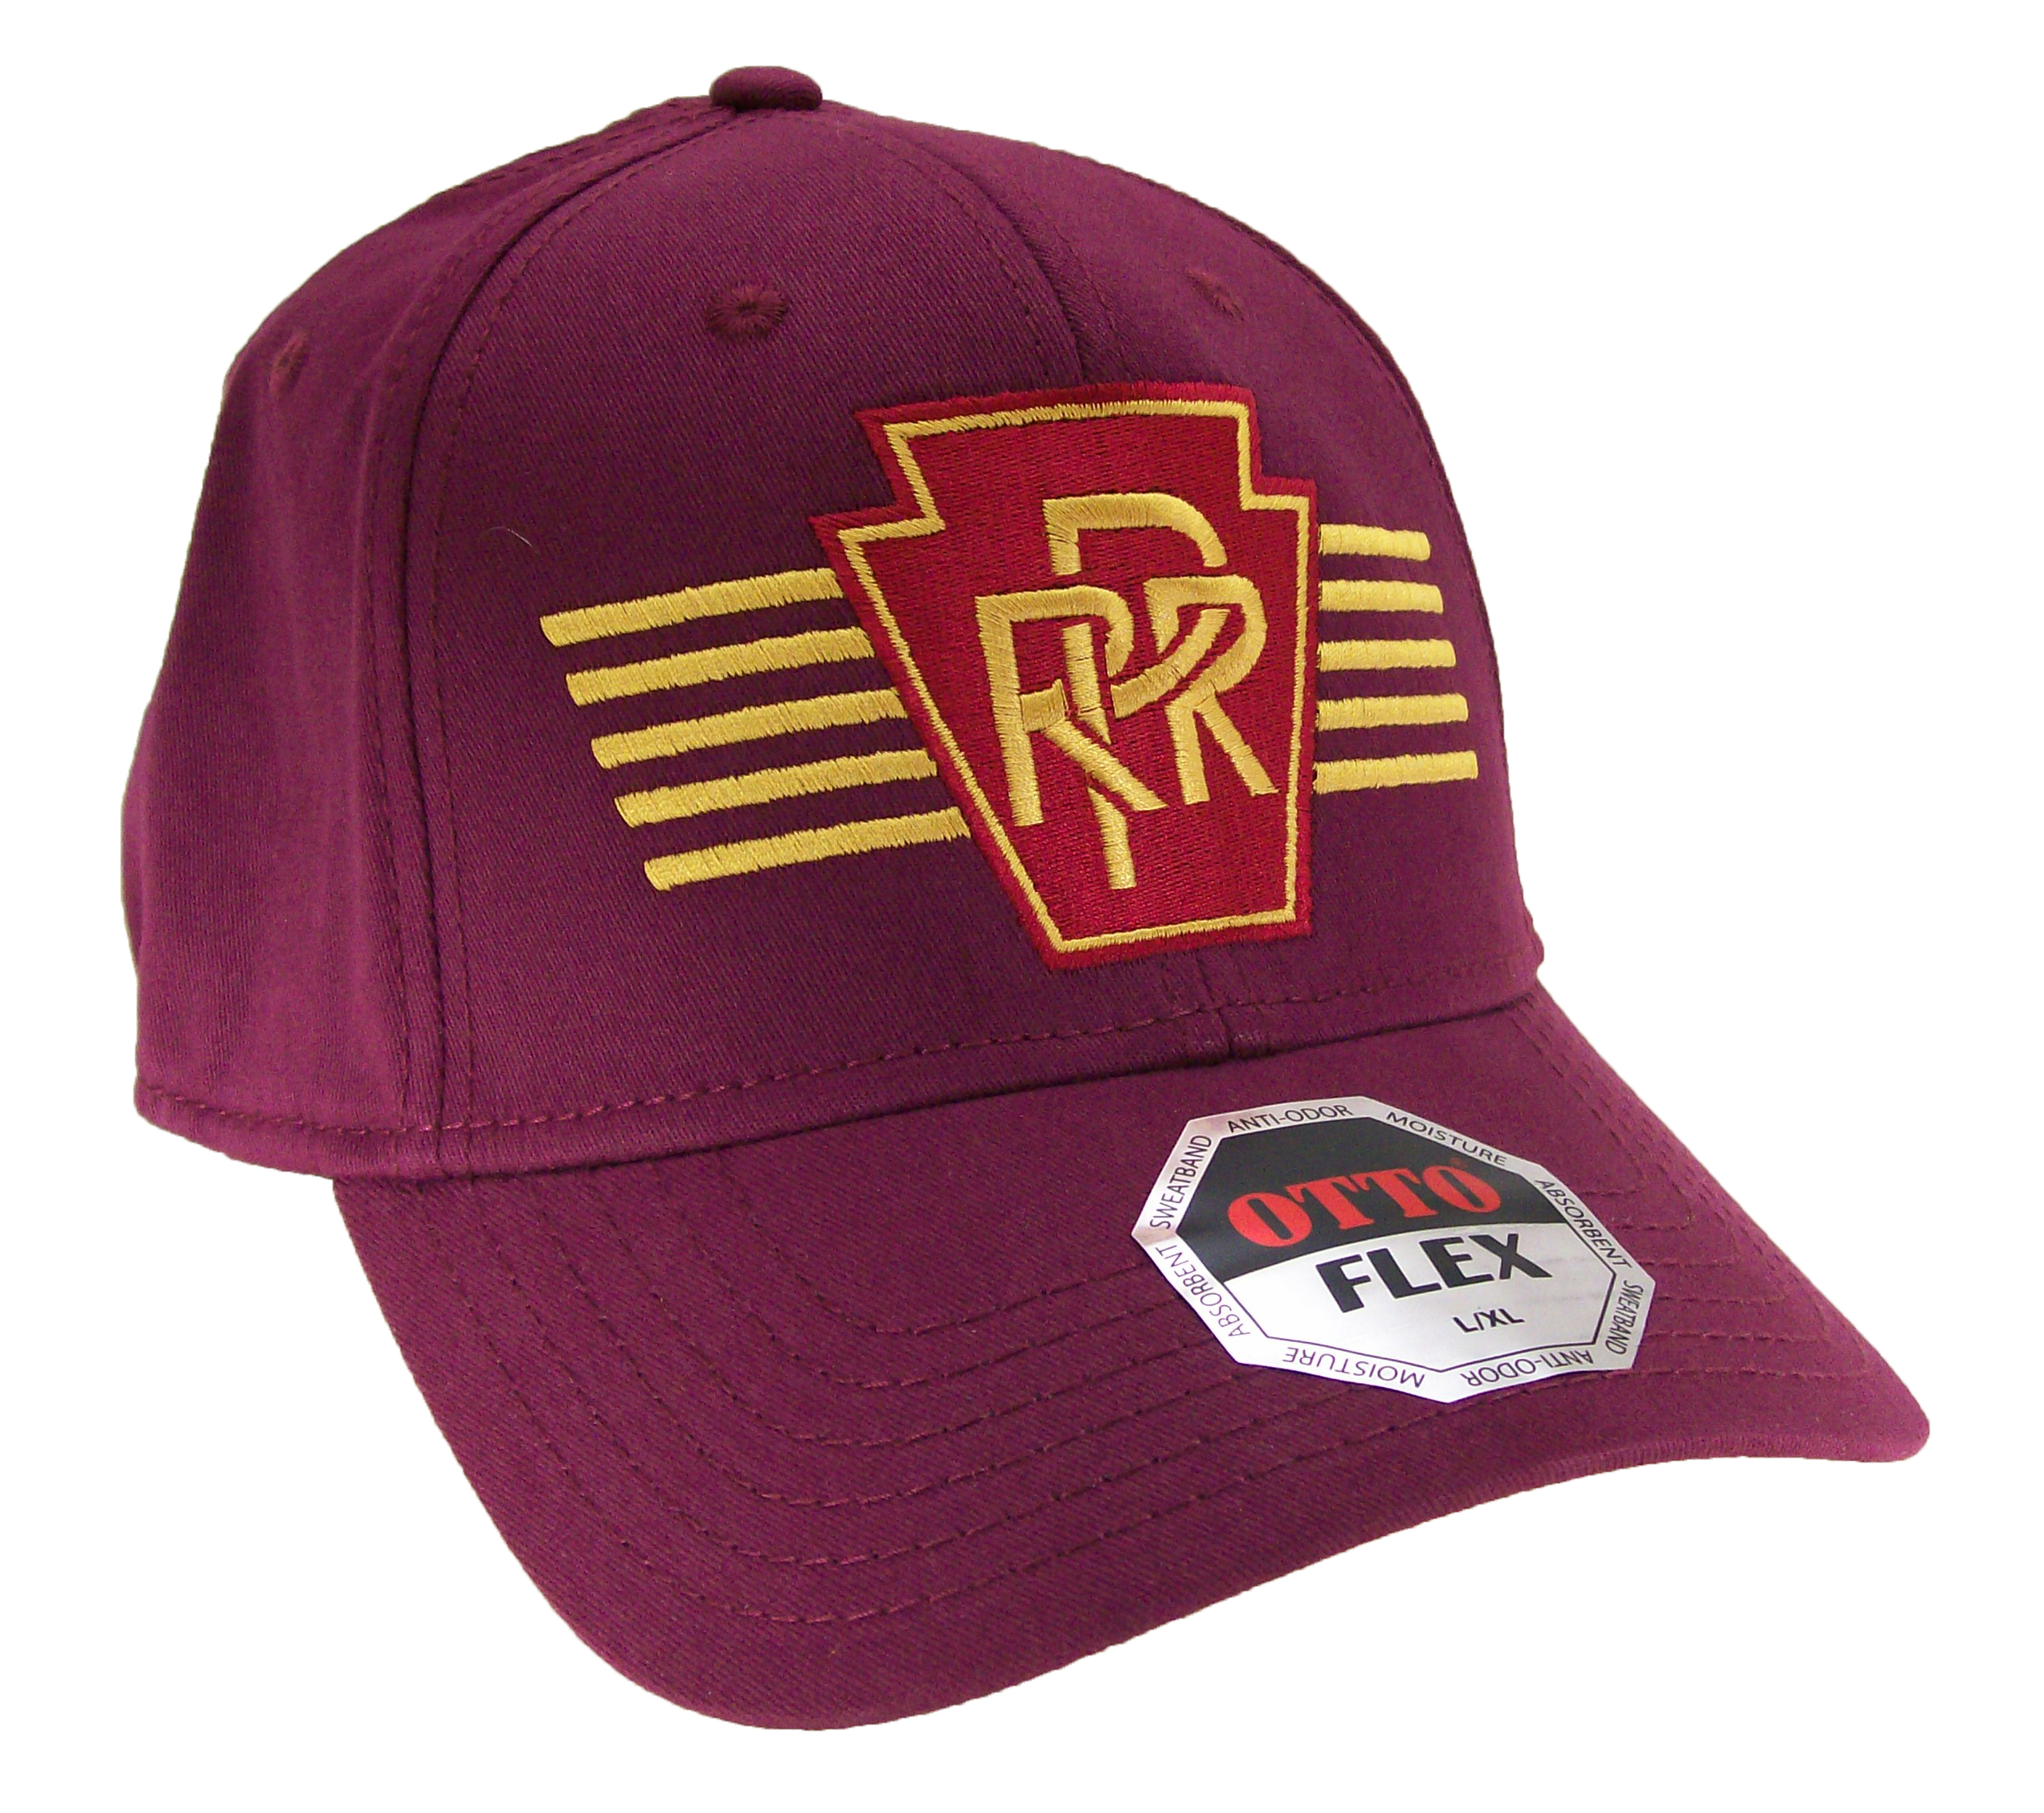 Railroad Cap Logos COLOR/SIZE CHOOSE Locomotive #40-1009FF Embroidered Fit Pennsylvania Hat Flex -